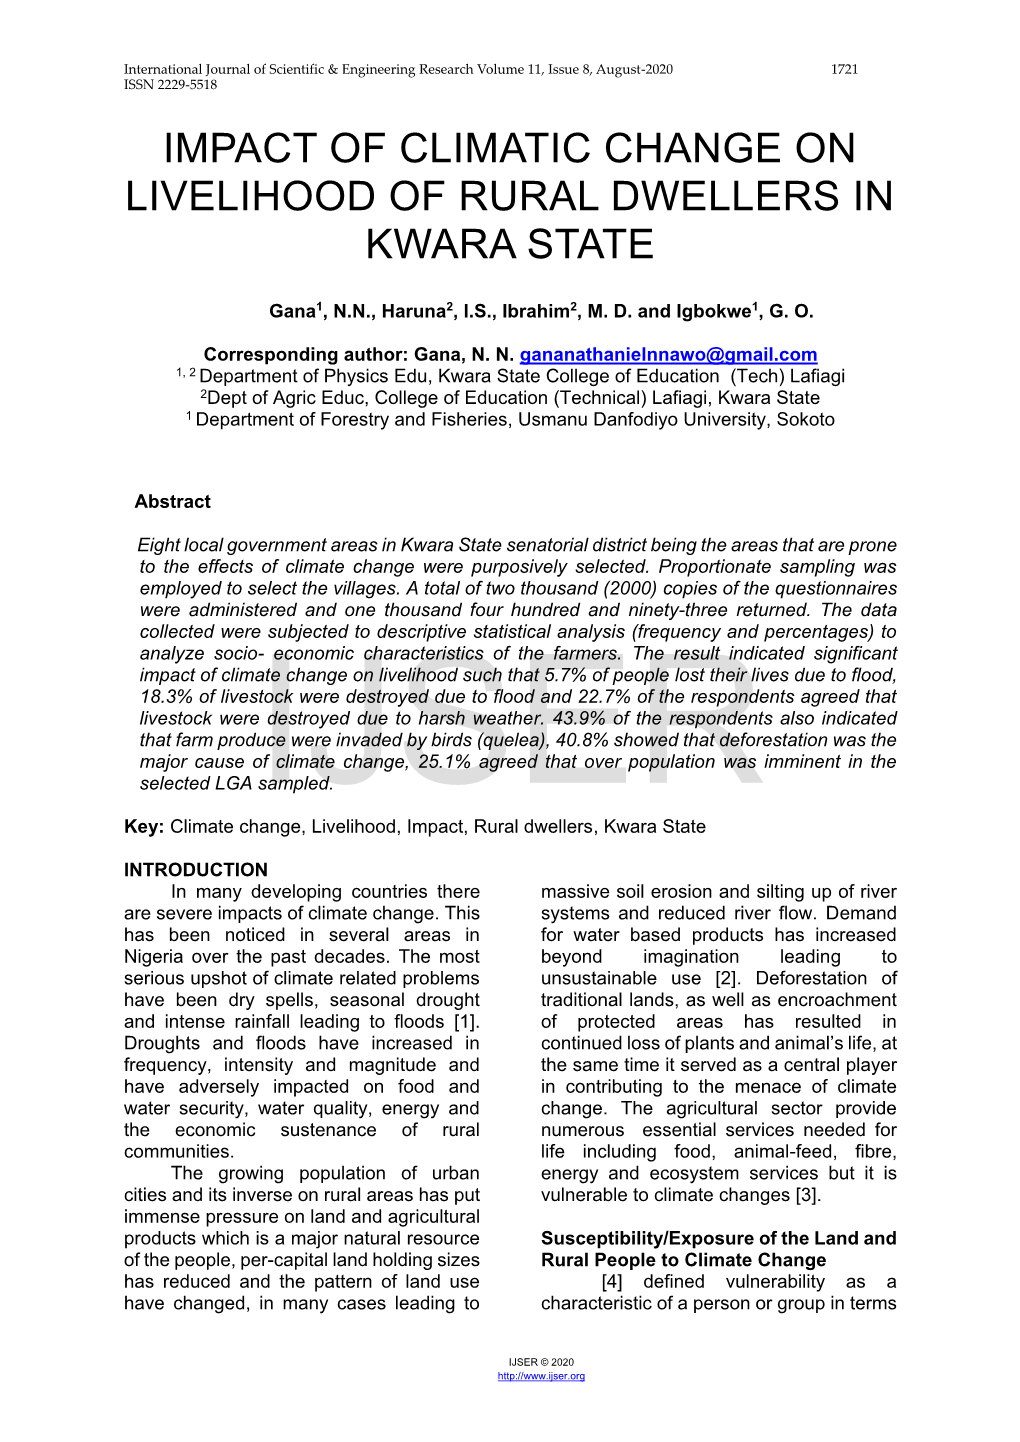 Impact of Climatic Change on Livelihood of Rural Dwellers in Kwara State